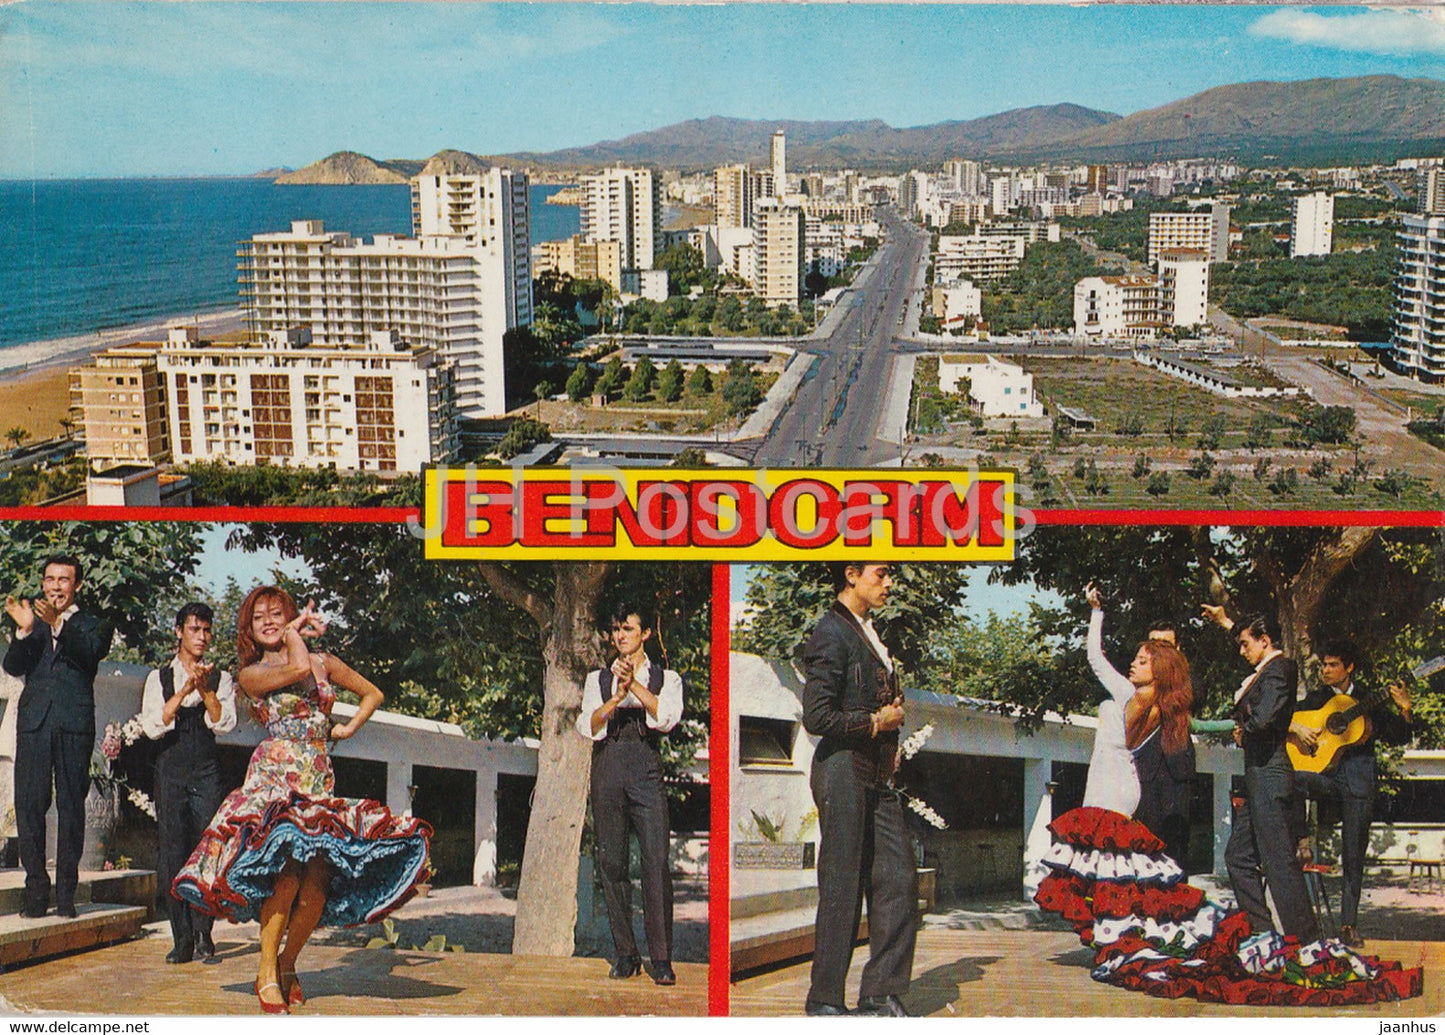 Benidorm - Vista panoramica - Panoramical view - dance - 1968 - Spain - used - JH Postcards